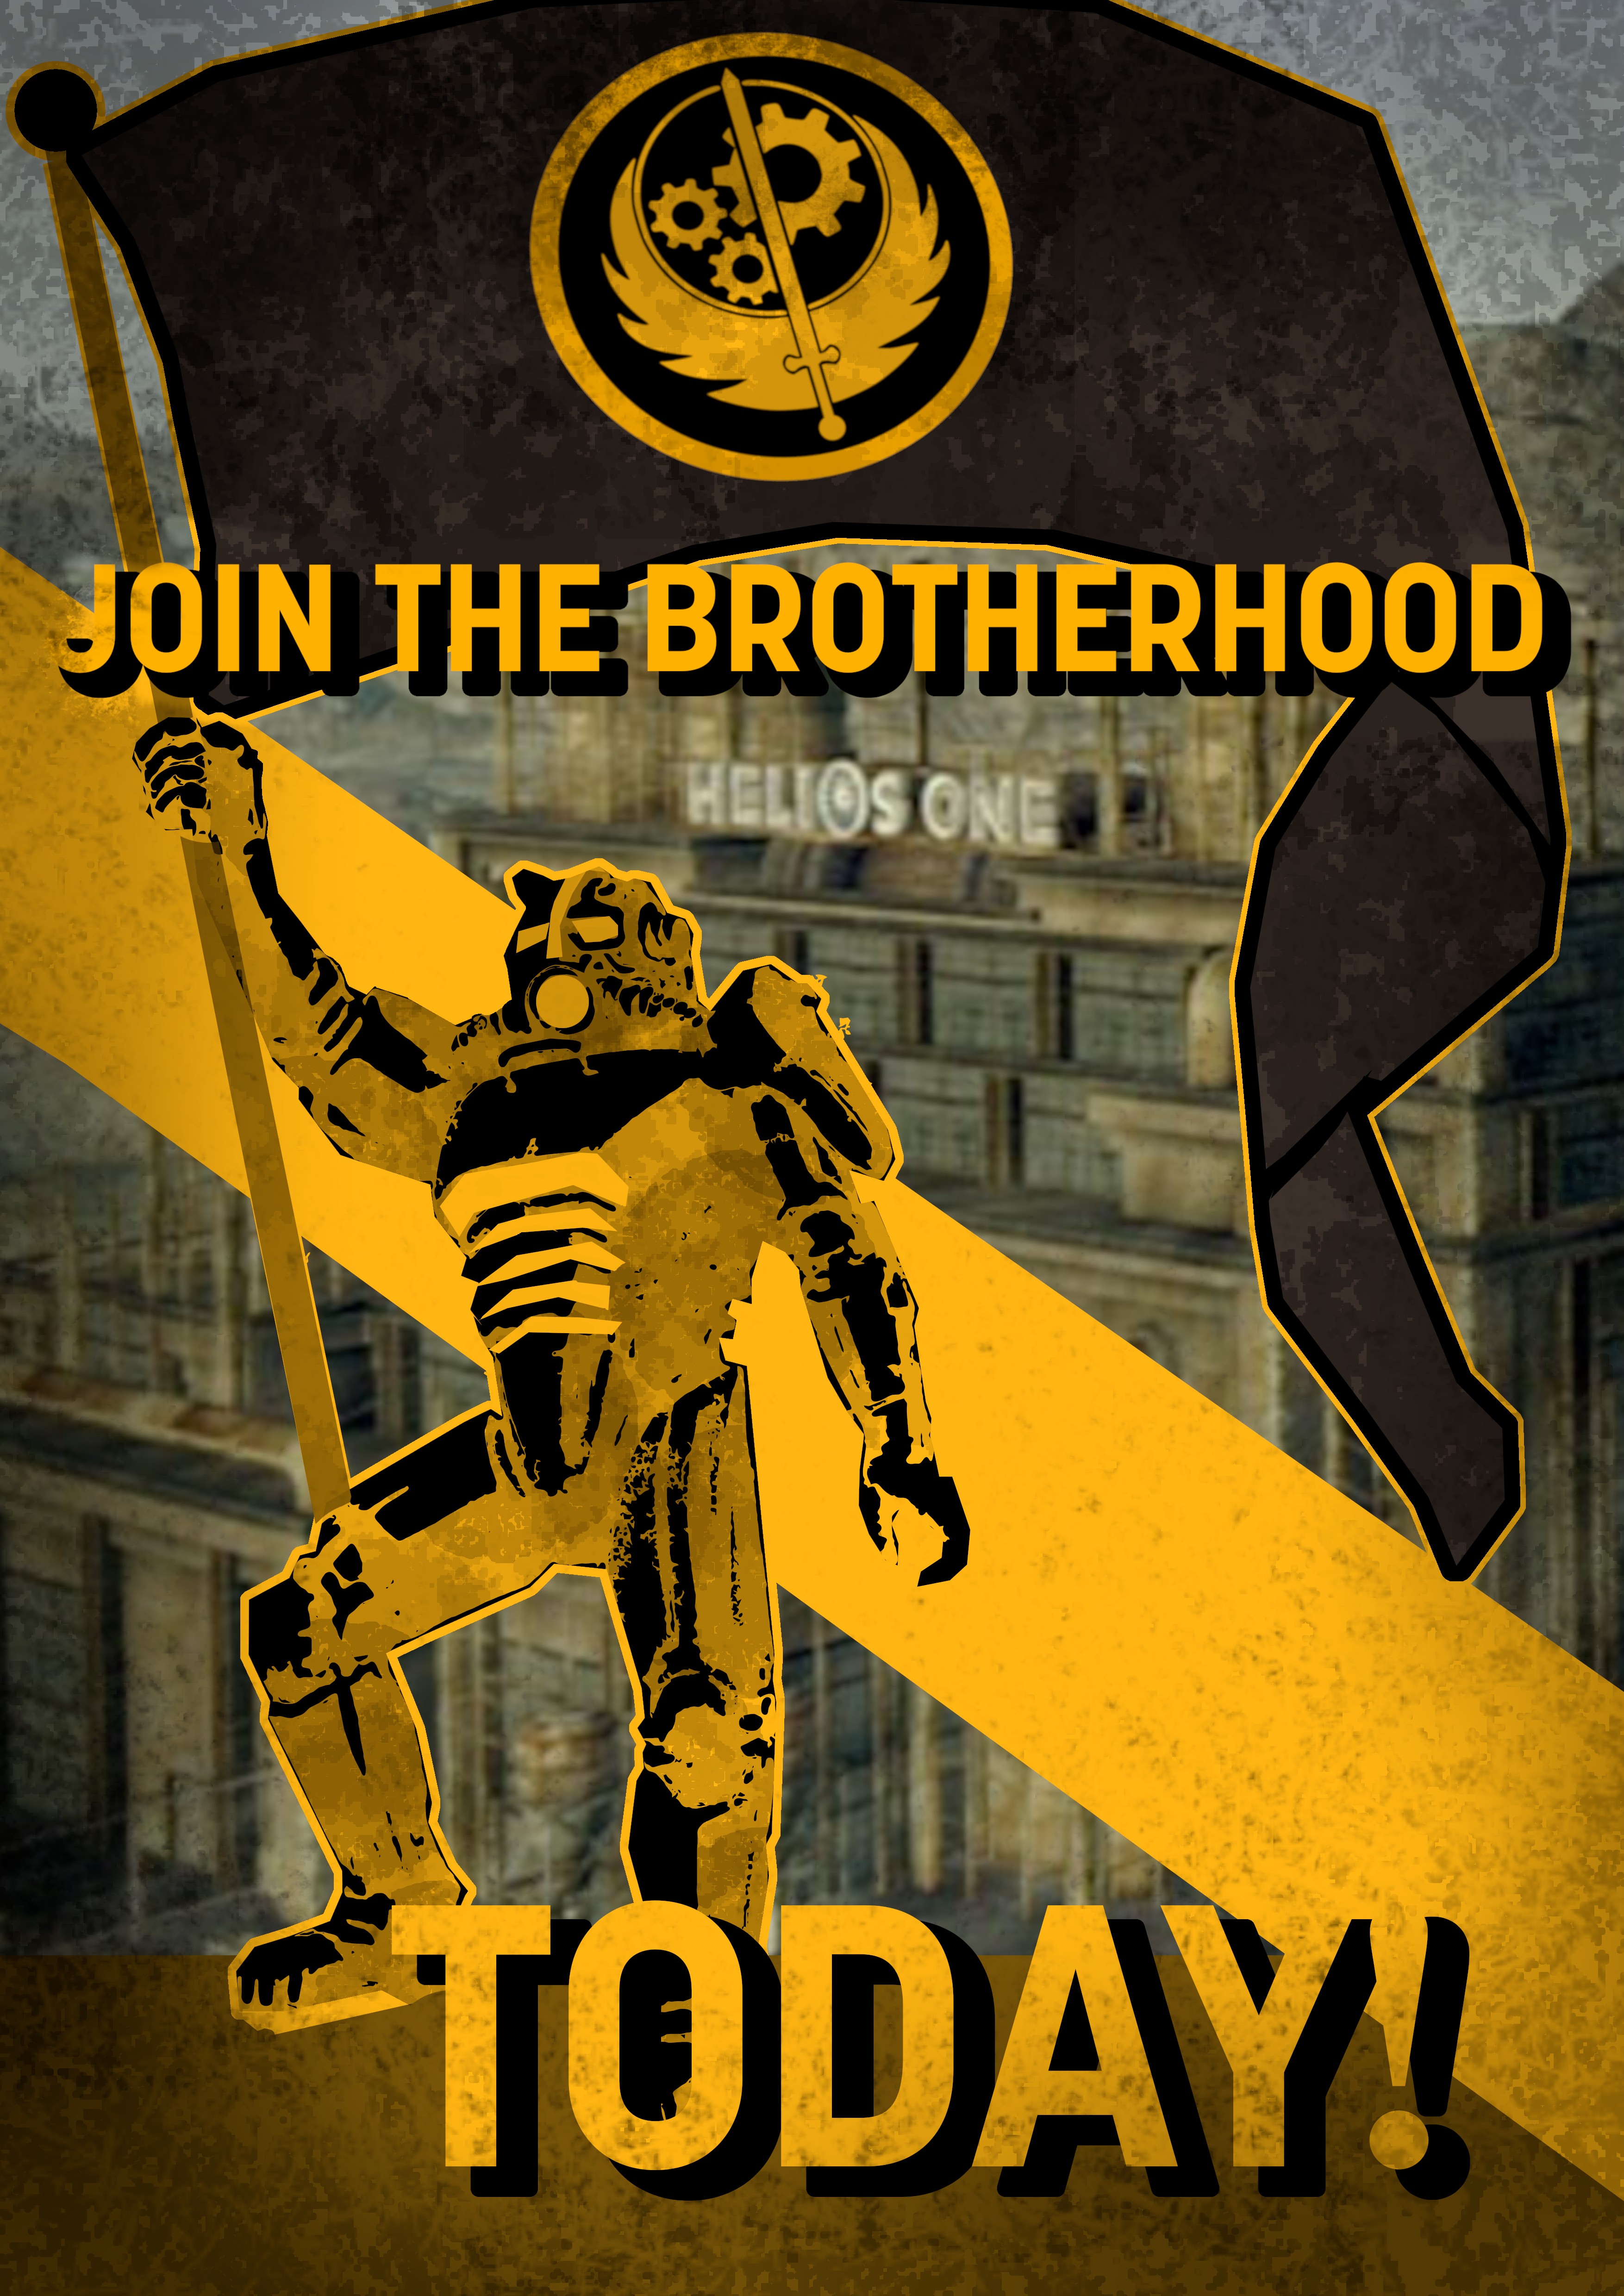 Fallout: New Vegas- Brotherhood of Steel Unforgotten